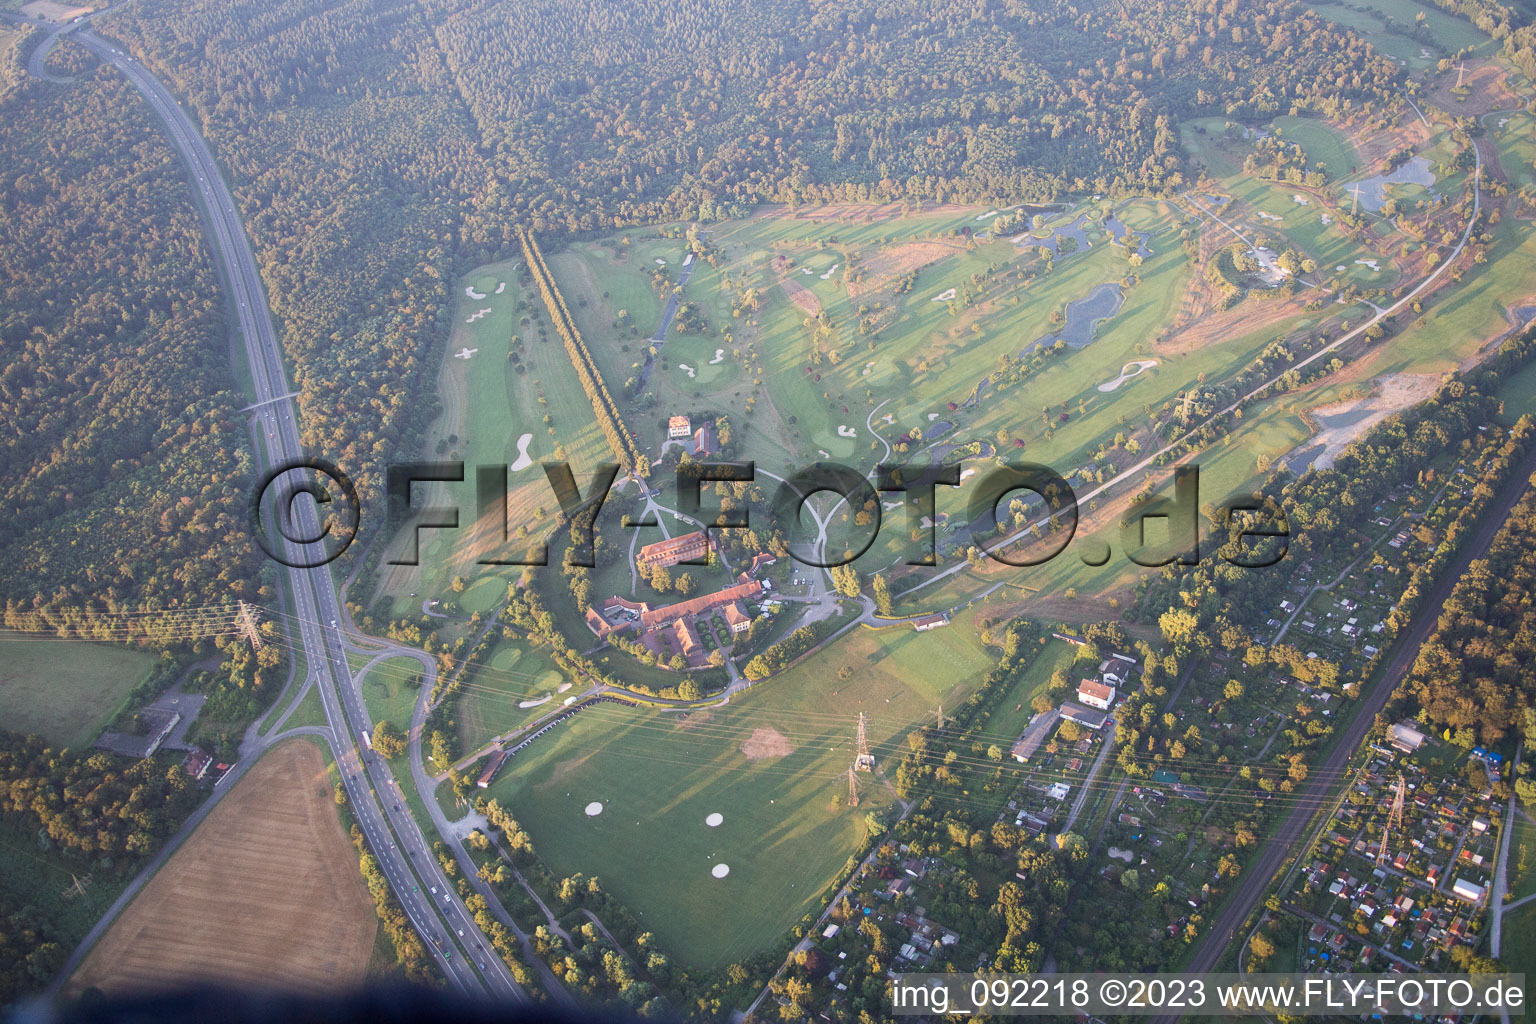 Aerial view of Scheibenhardt Golf Club in the district Beiertheim-Bulach in Karlsruhe in the state Baden-Wuerttemberg, Germany